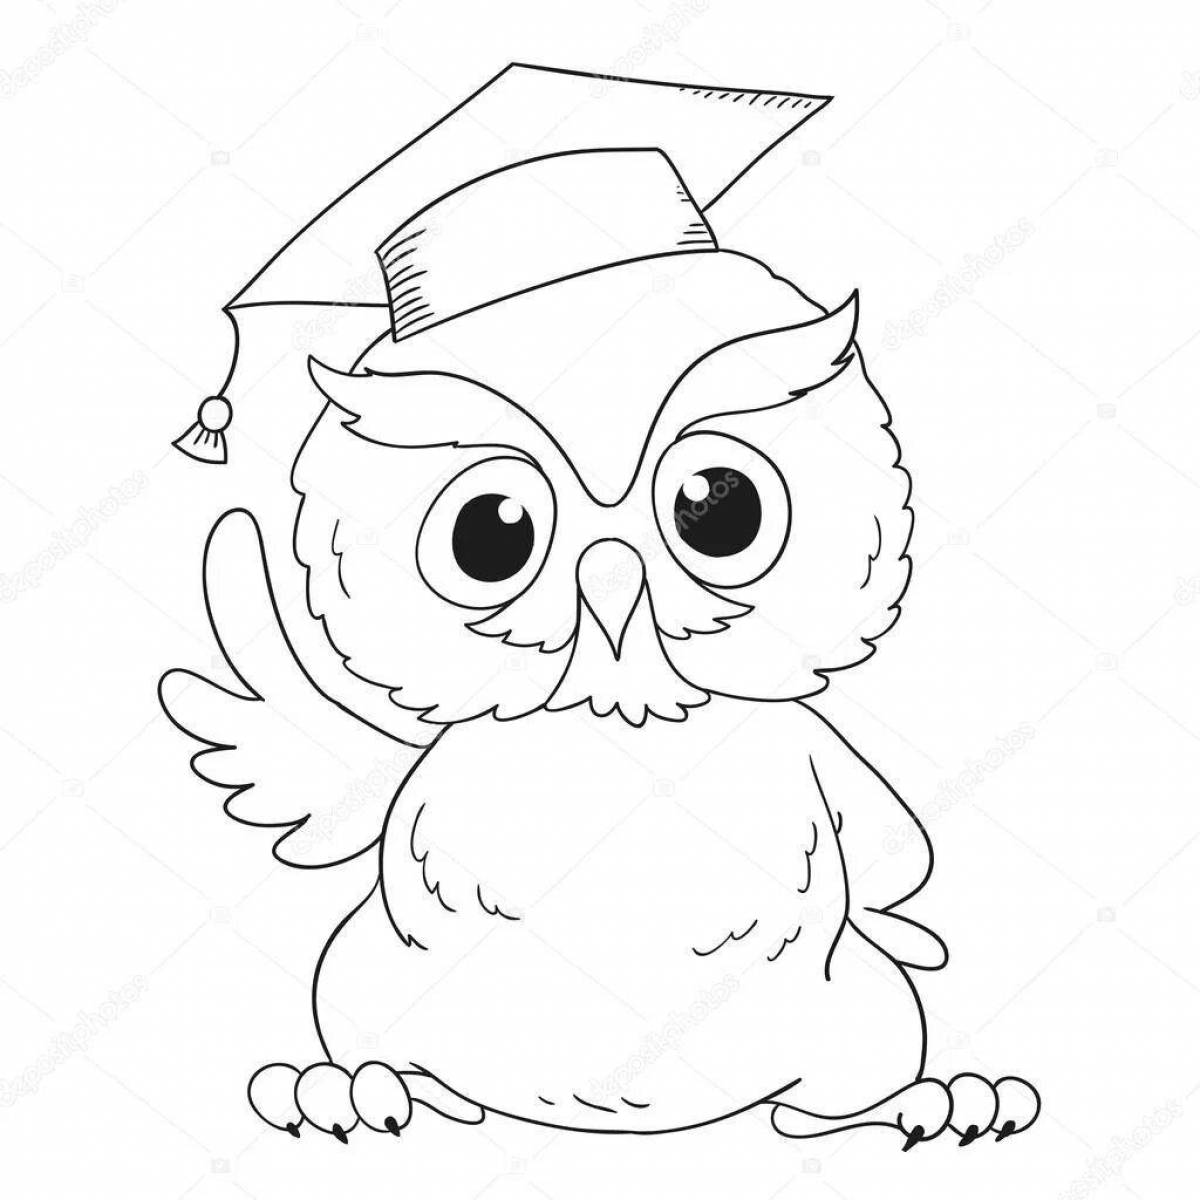 Magic smart owl coloring book for kids